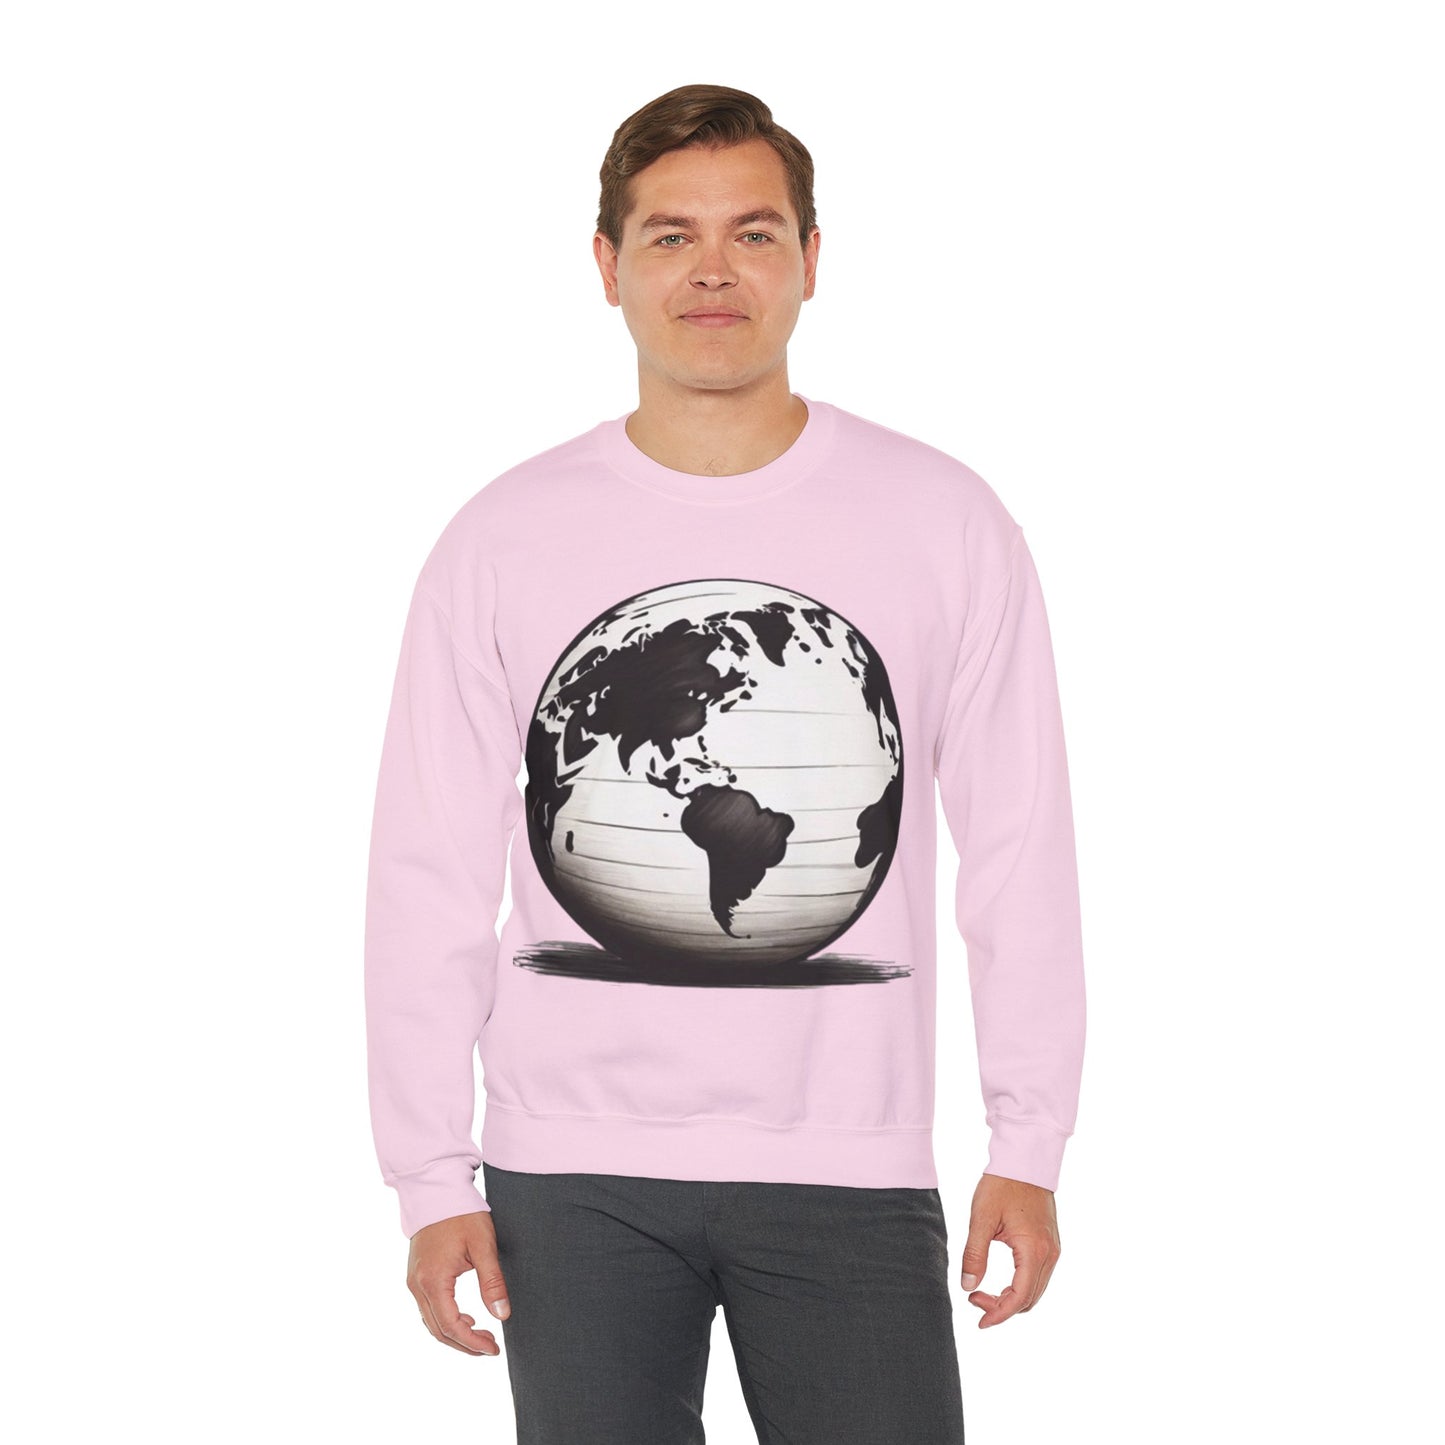 Black and White Earth Sphere - Unisex Crewneck Sweatshirt